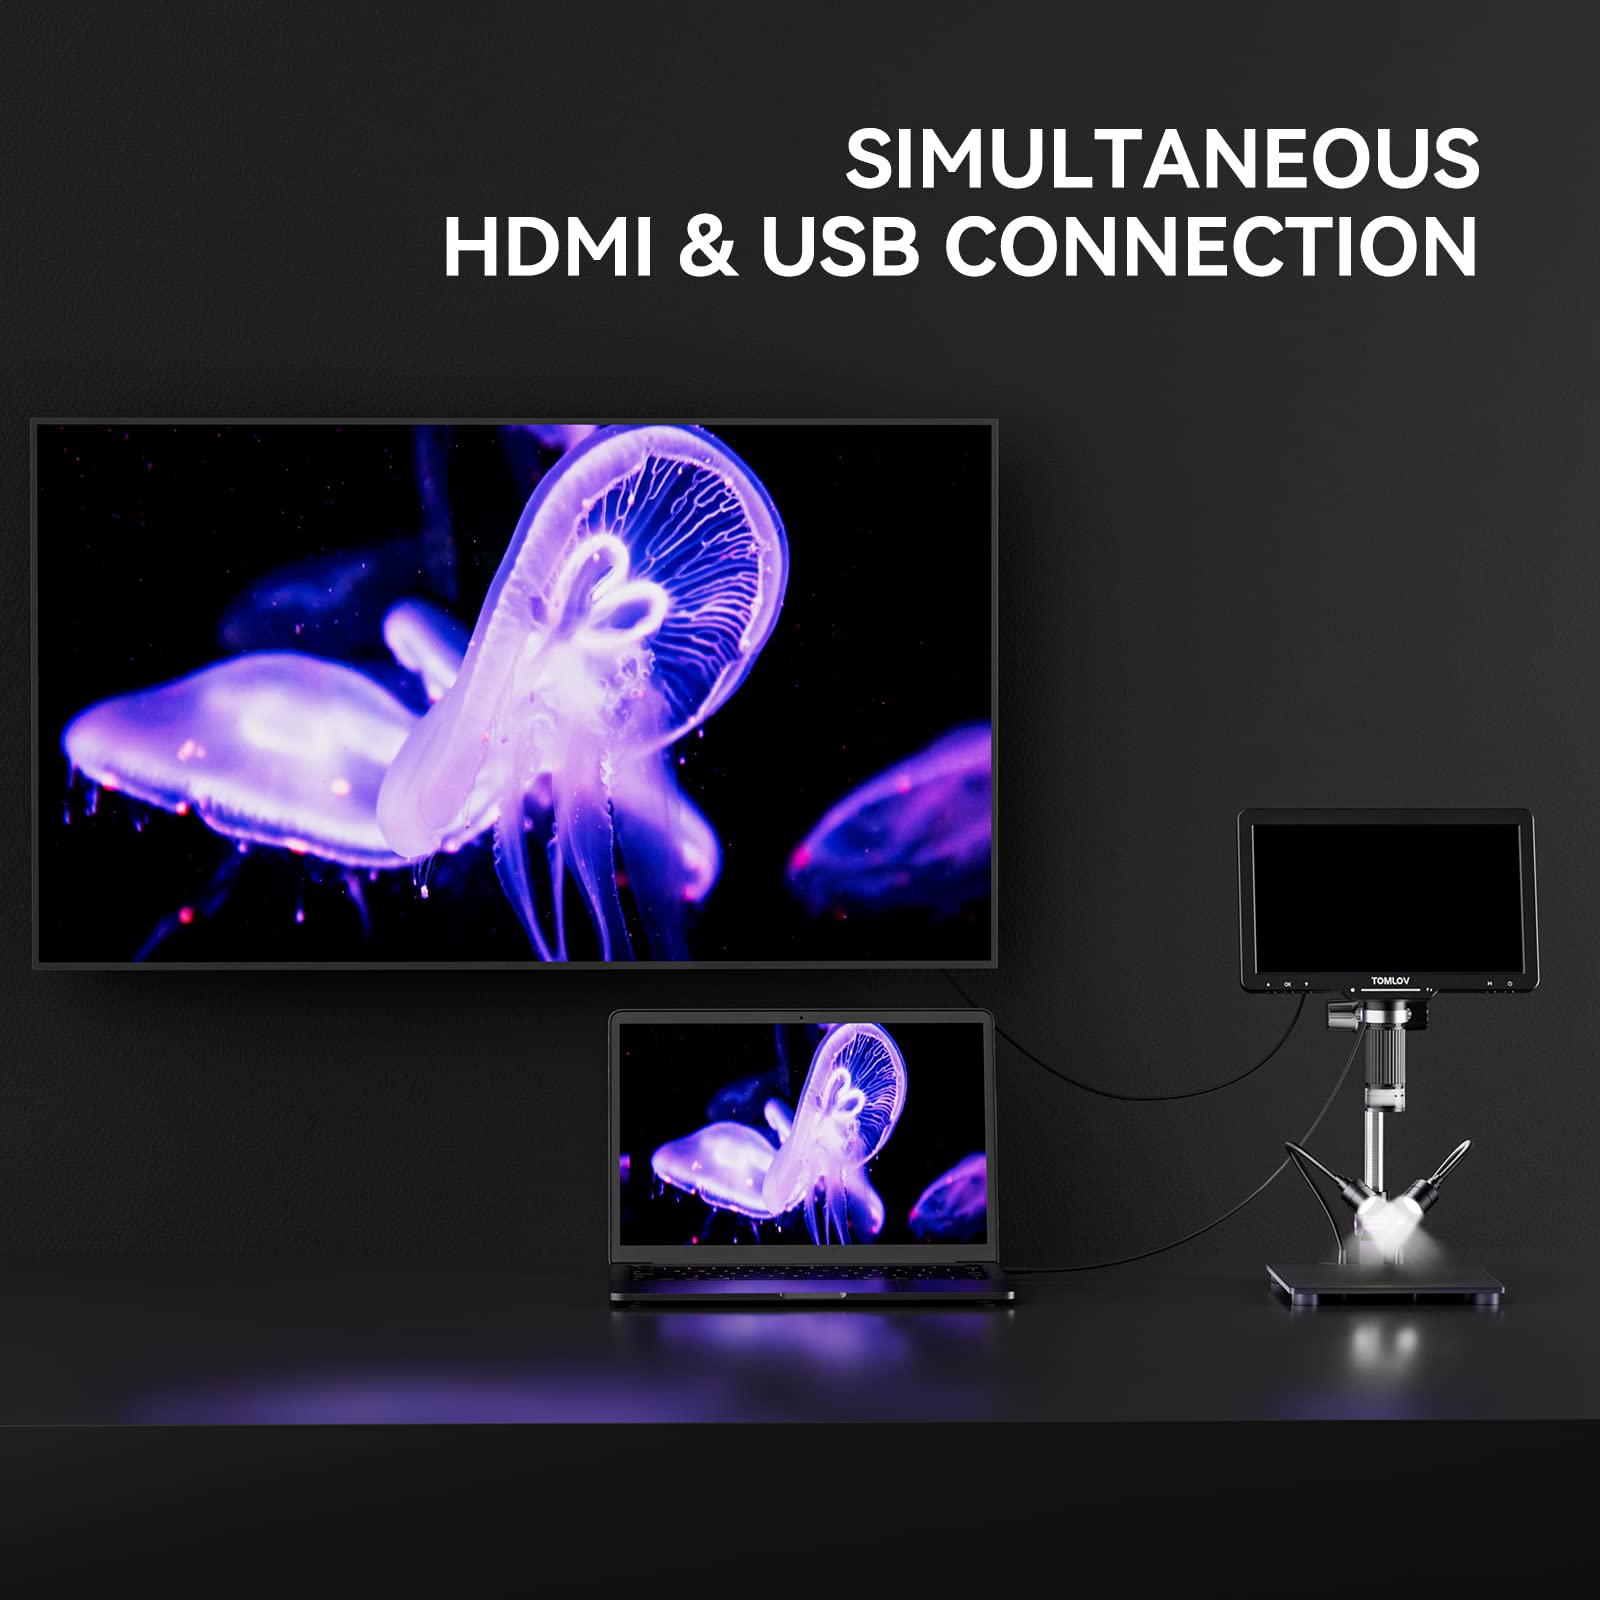 TOMLOV DM501 10" HDMI Digital mikroskop mit Polarisator 